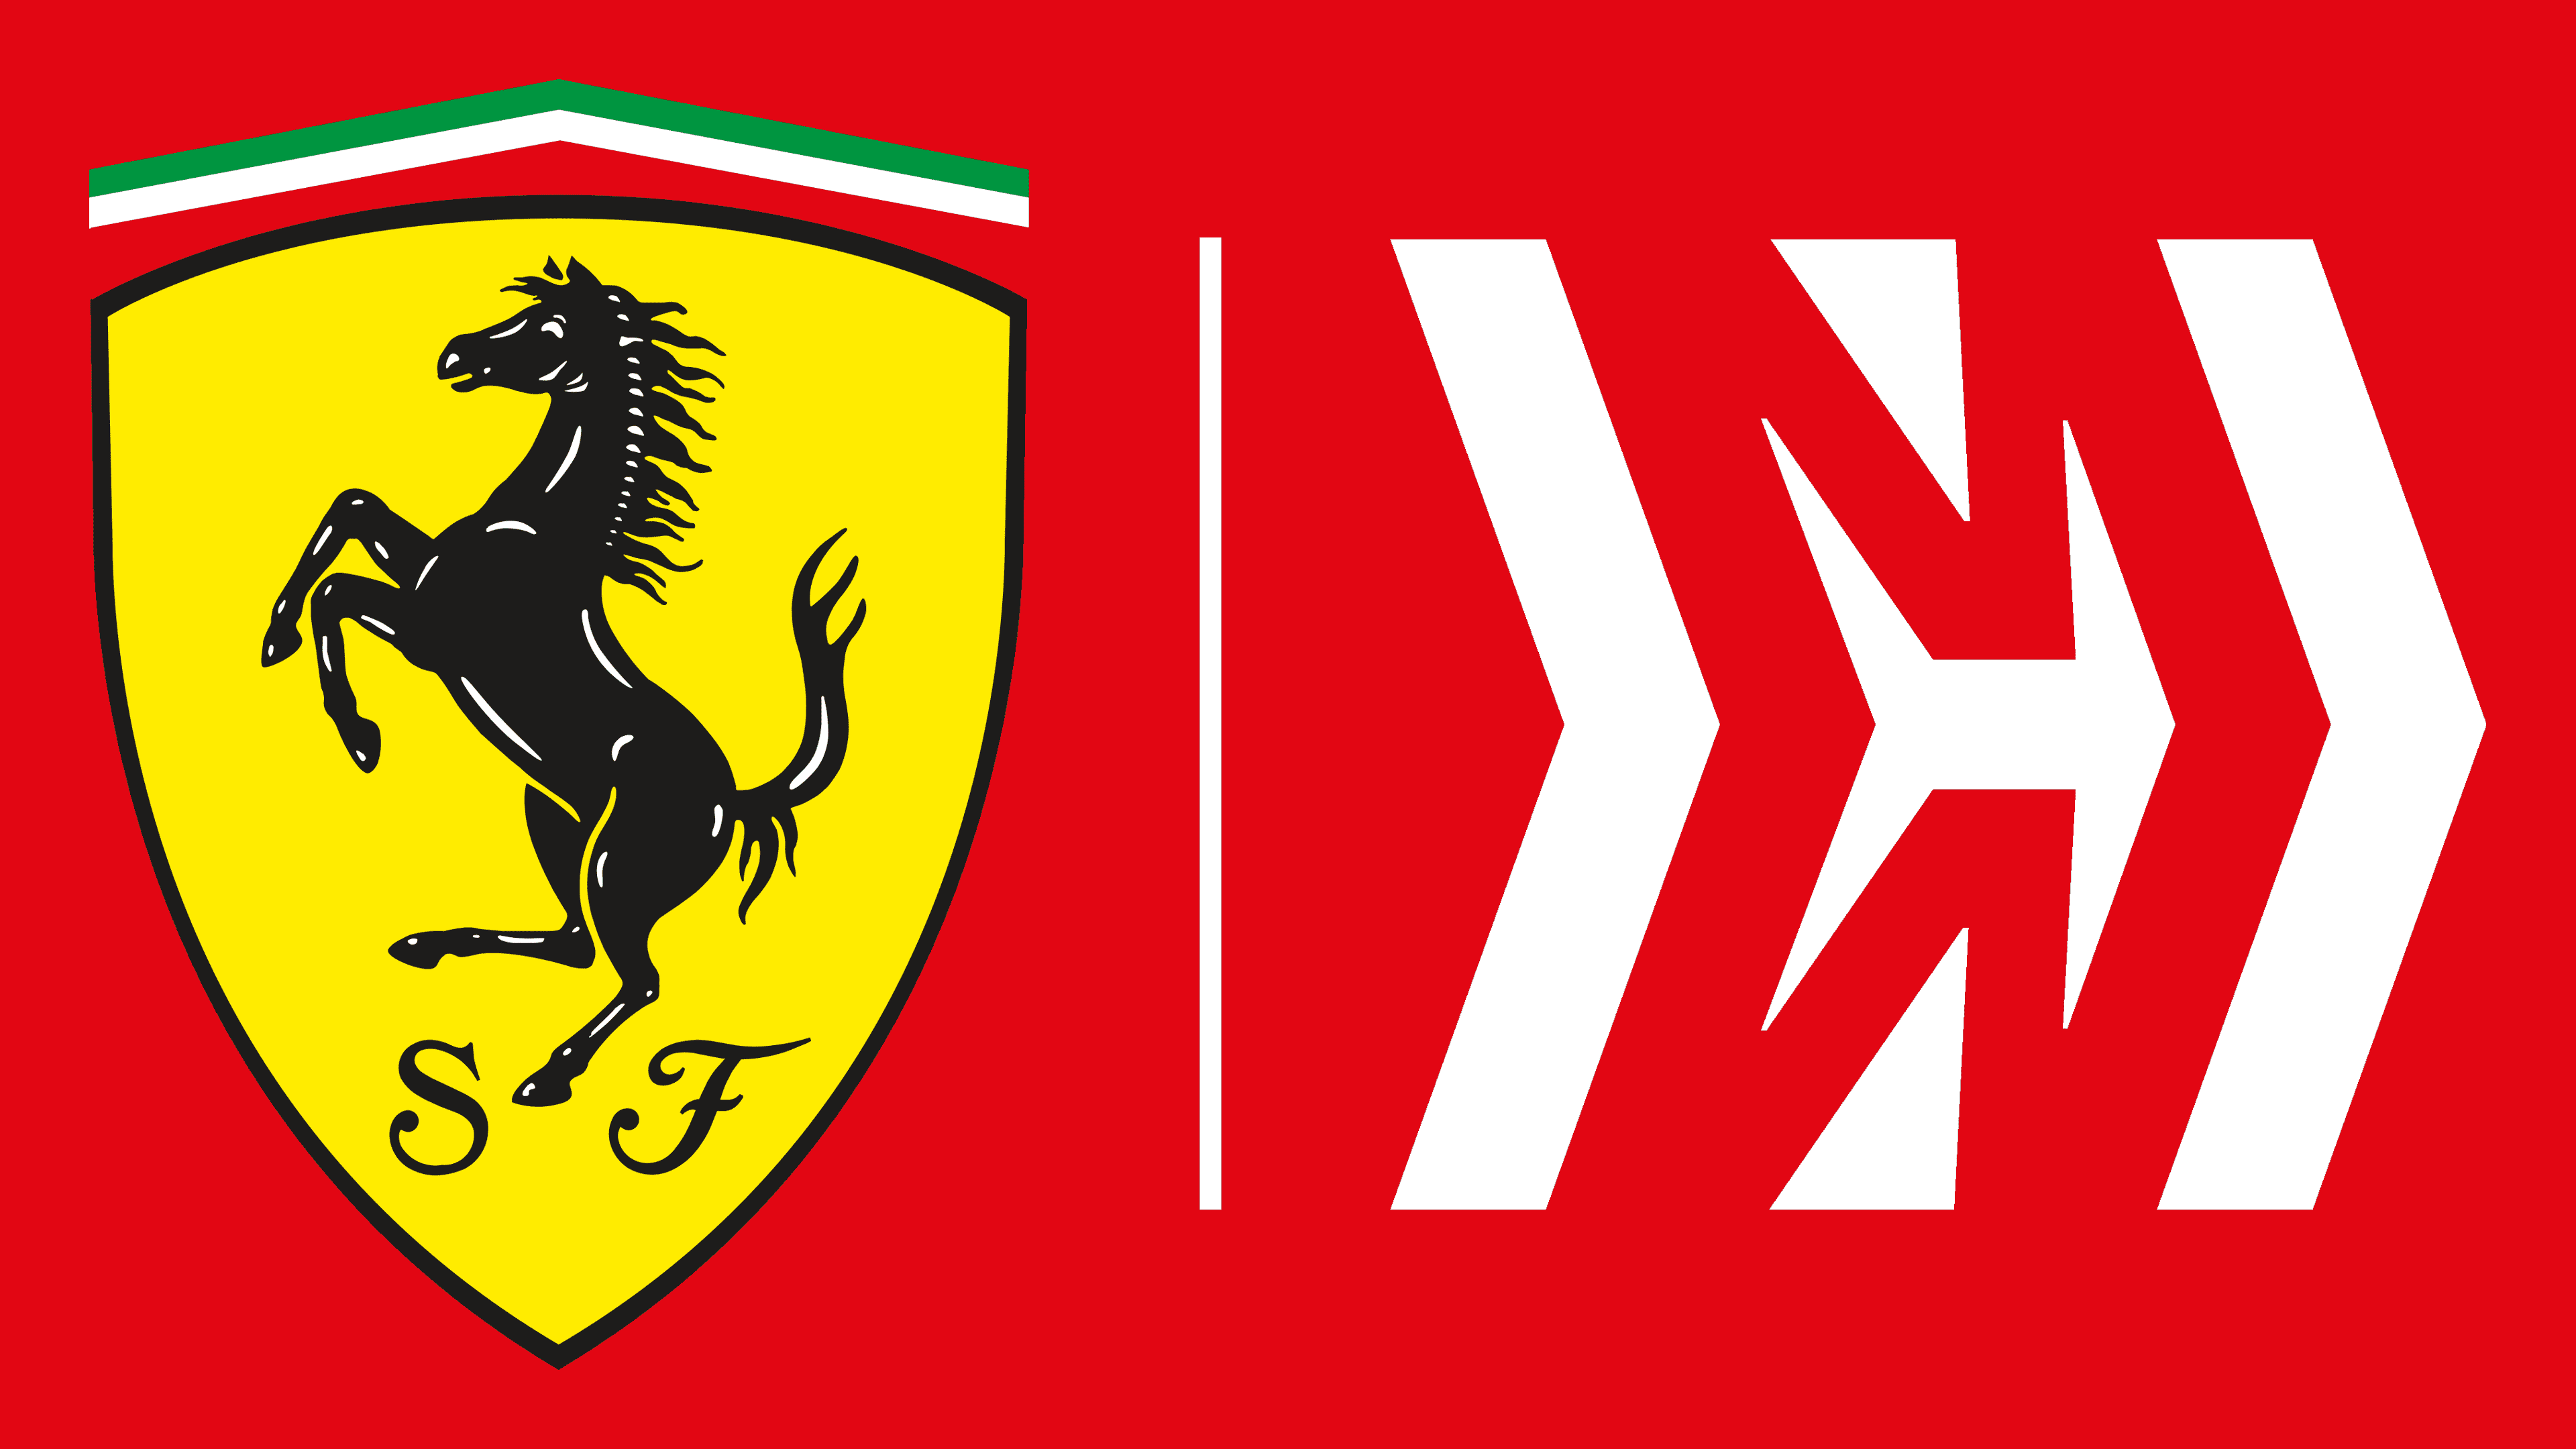 Ferrari 3 Logo PNG Transparent & SVG Vector - Freebie Supply